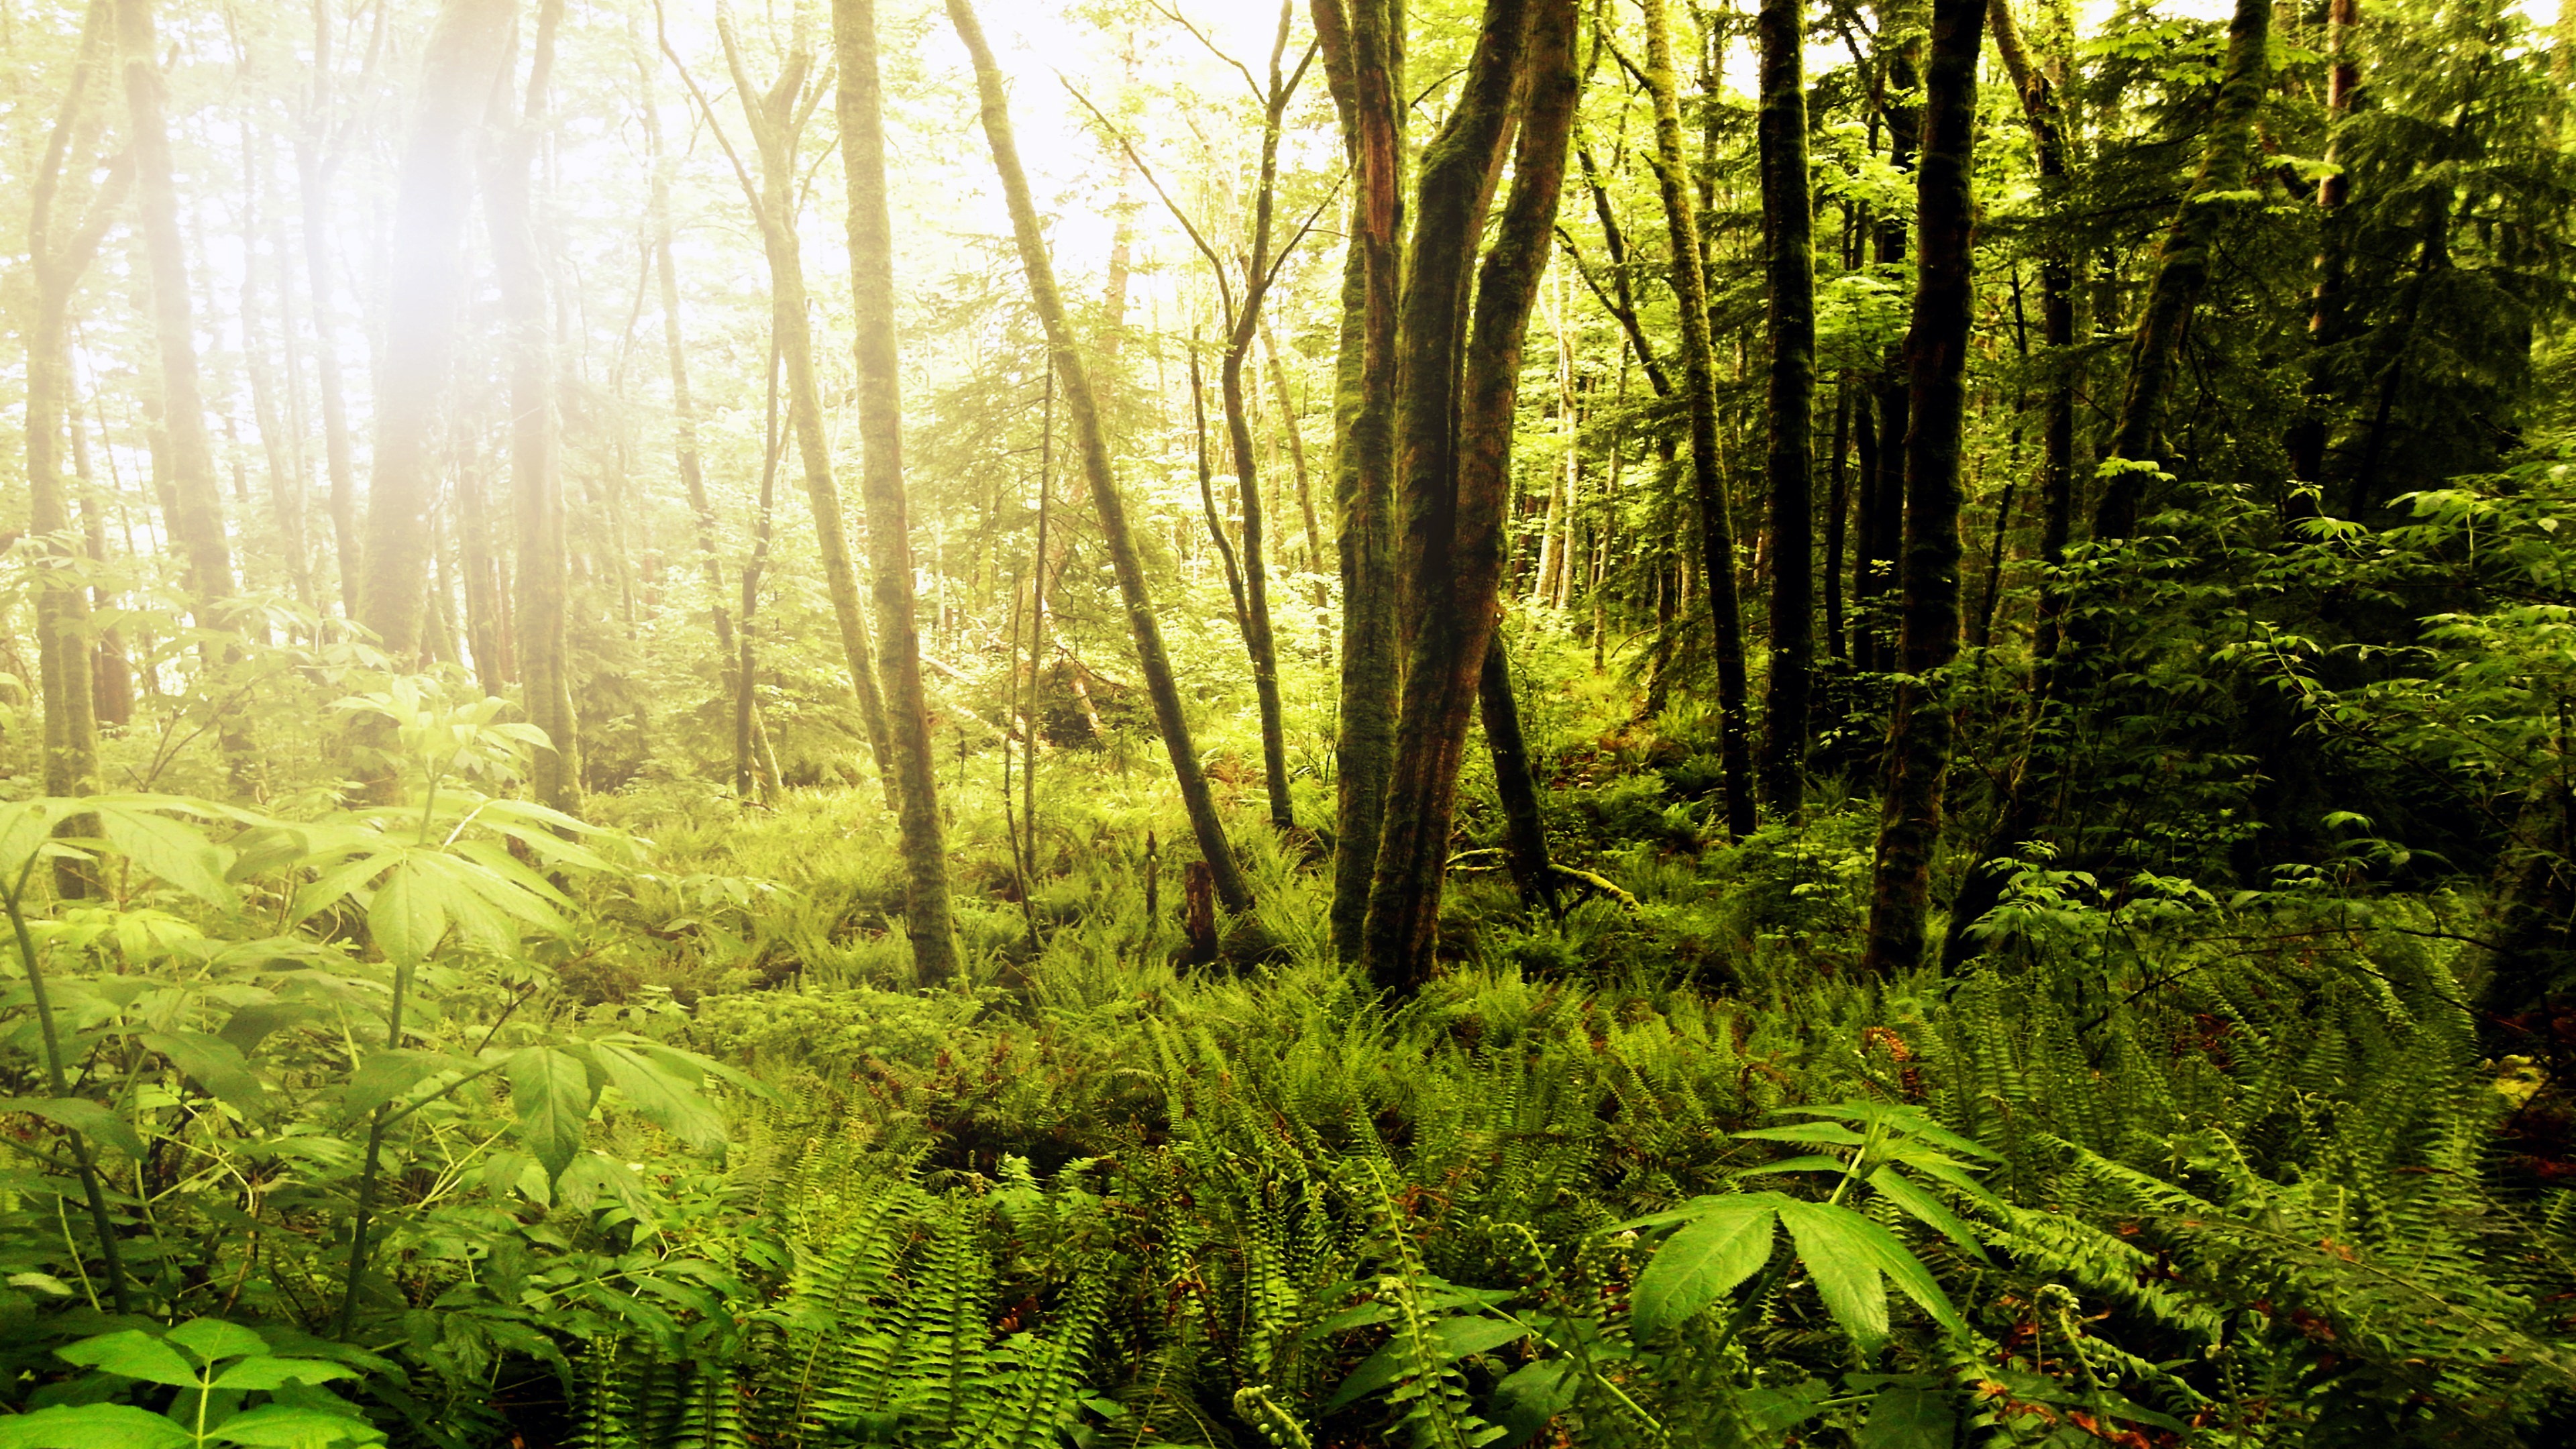 General 3840x2160 forest ferns wilderness trees nature sunlight plants